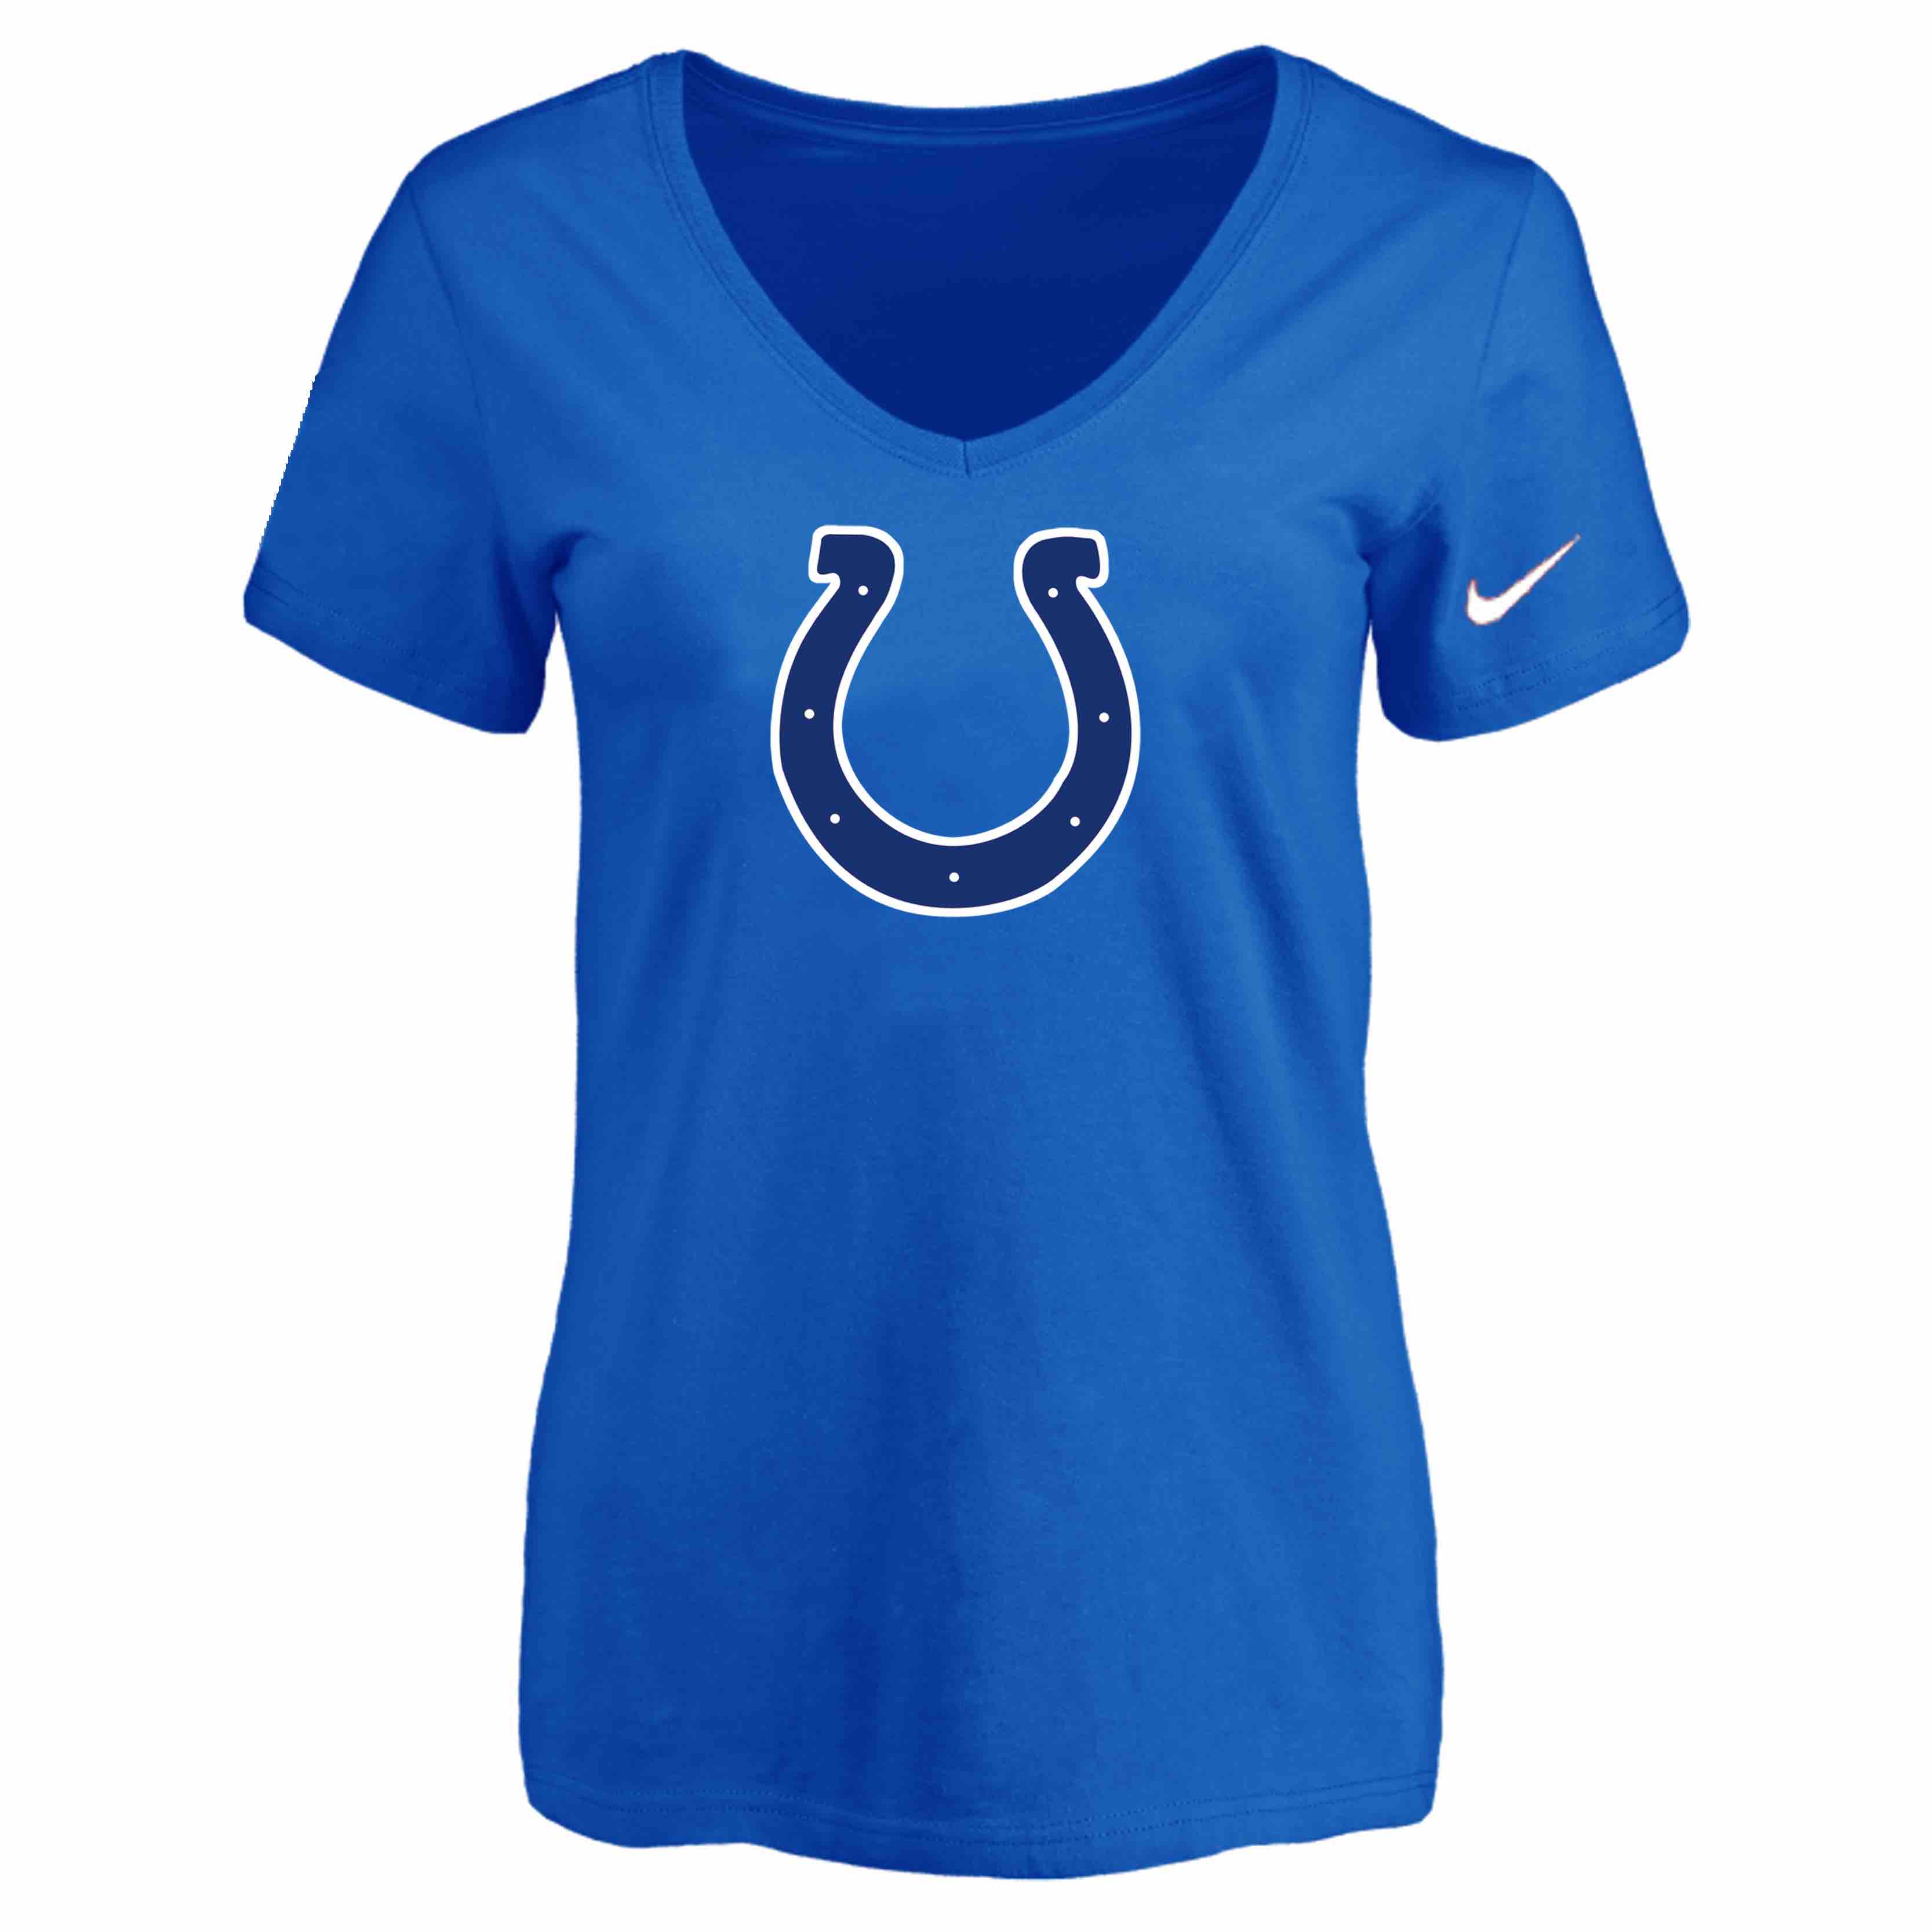 Indiannapolis Colts Blue Womens Logo V-neck T-Shirt